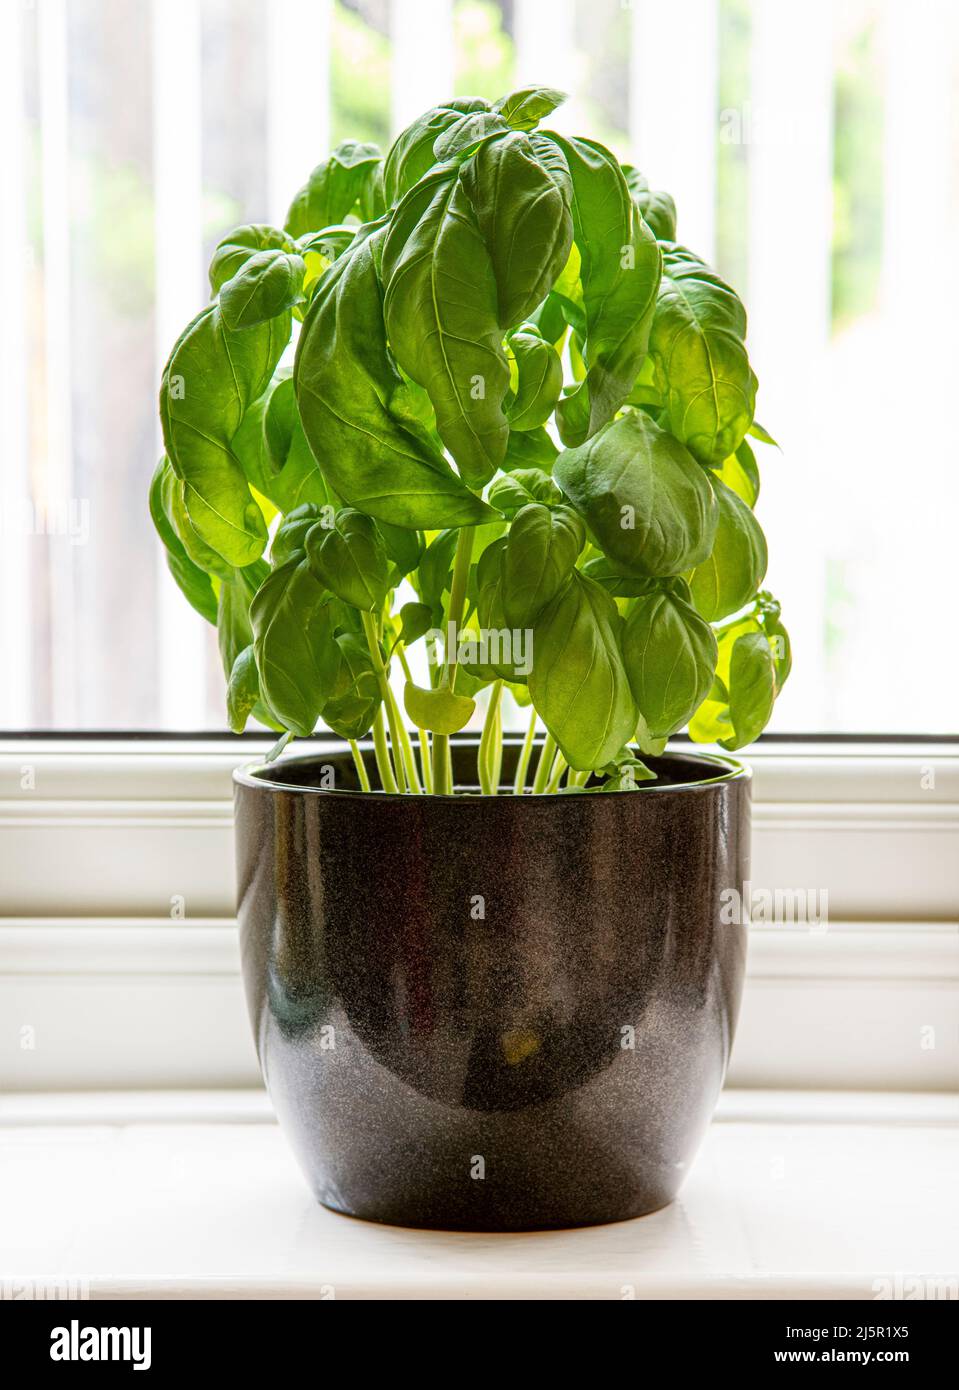 Basil plant growing in pot on window ledge Stock Photo